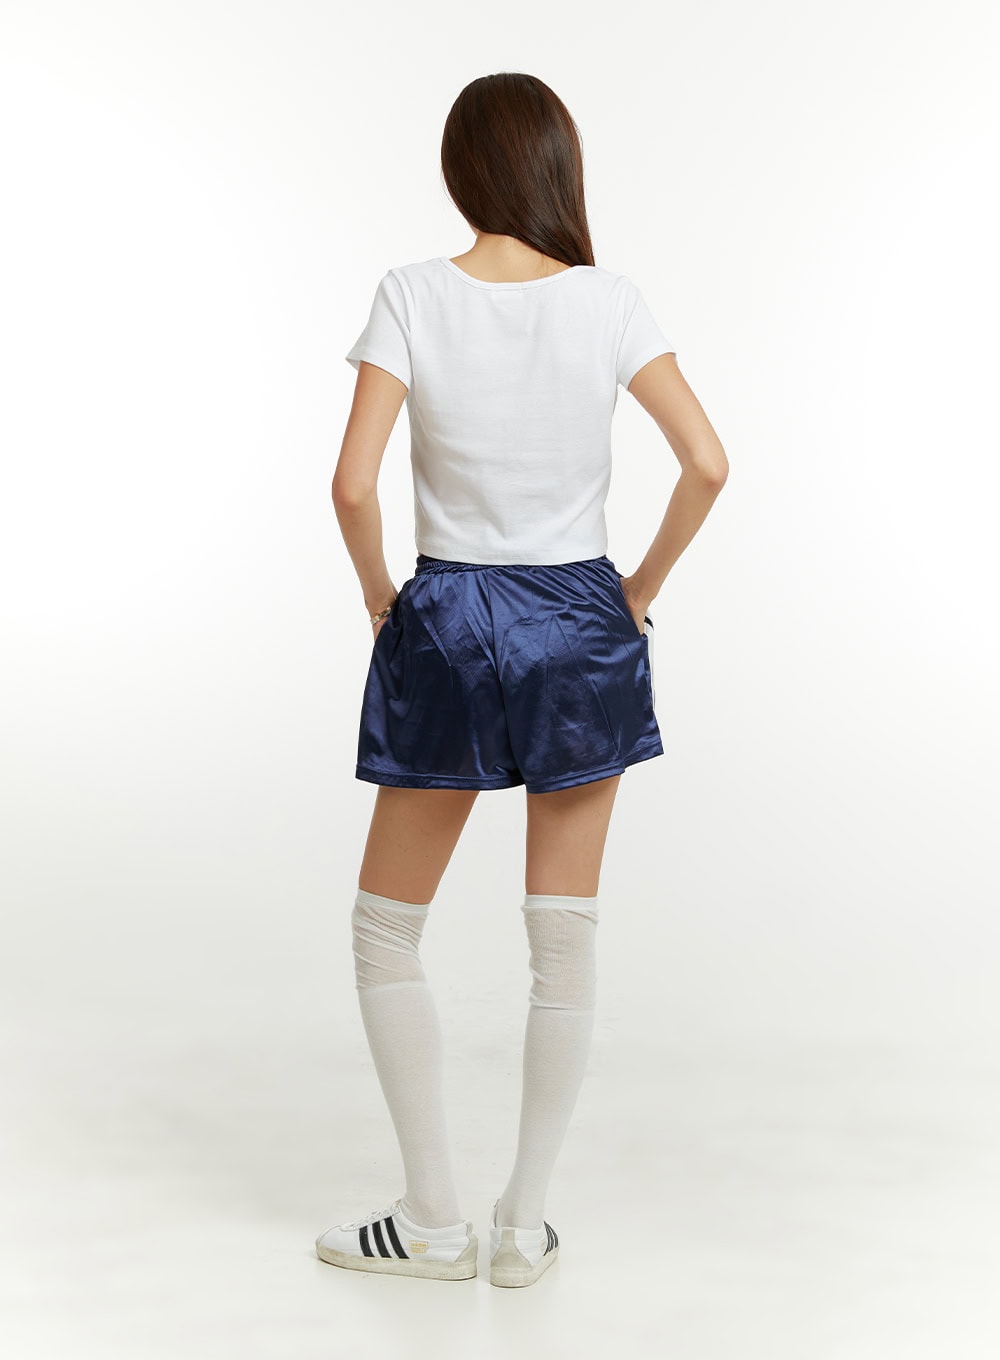 activewear-track-shorts-cu421